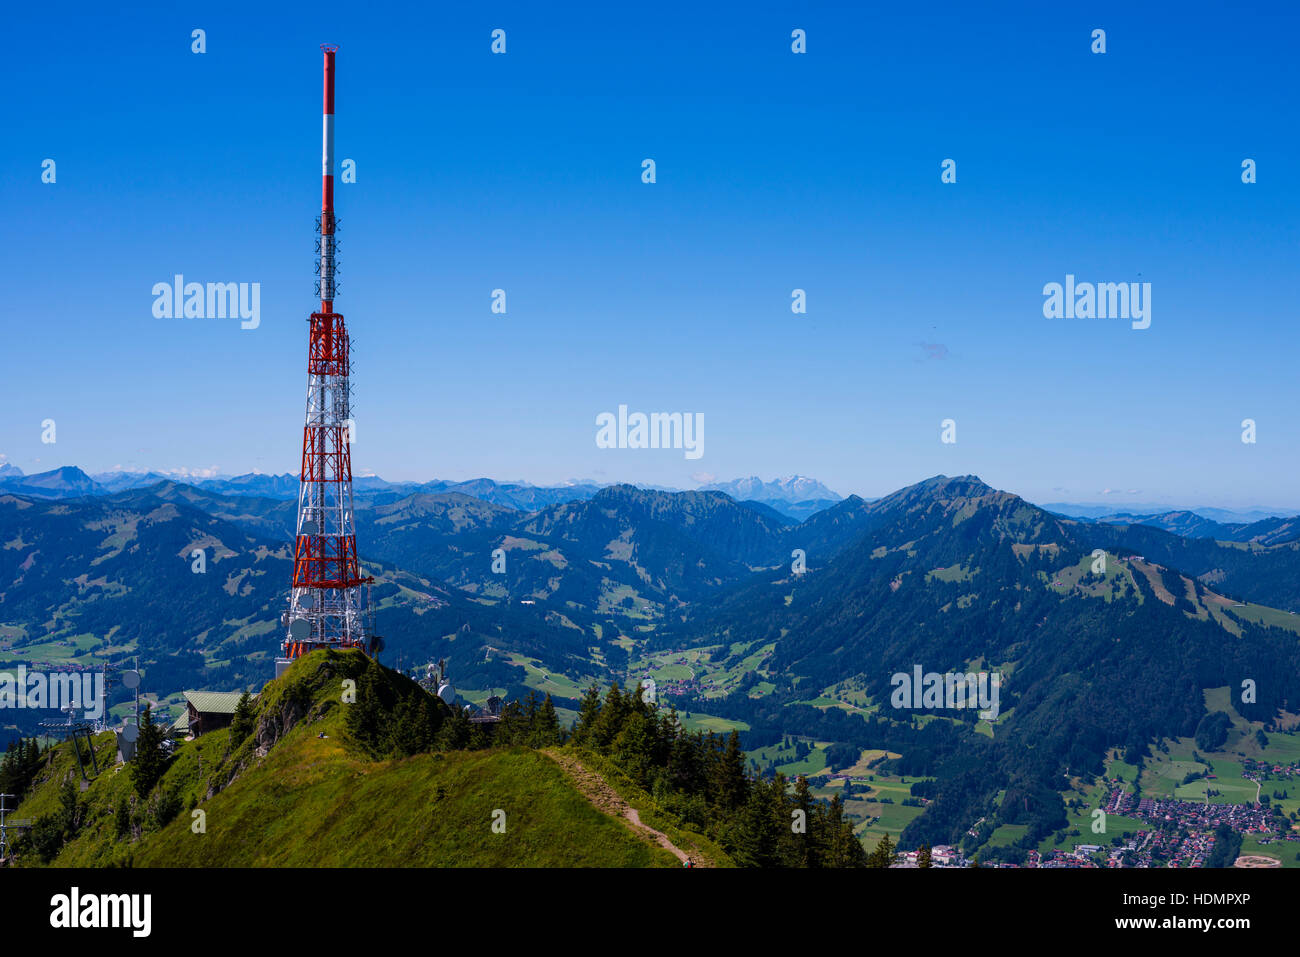 Bayerischer Rundfunk estación de radiodifusión, Grünten, 1.738 m, Illertal, Allgäu Alpes Allgäu, Baviera, Alemania Foto de stock